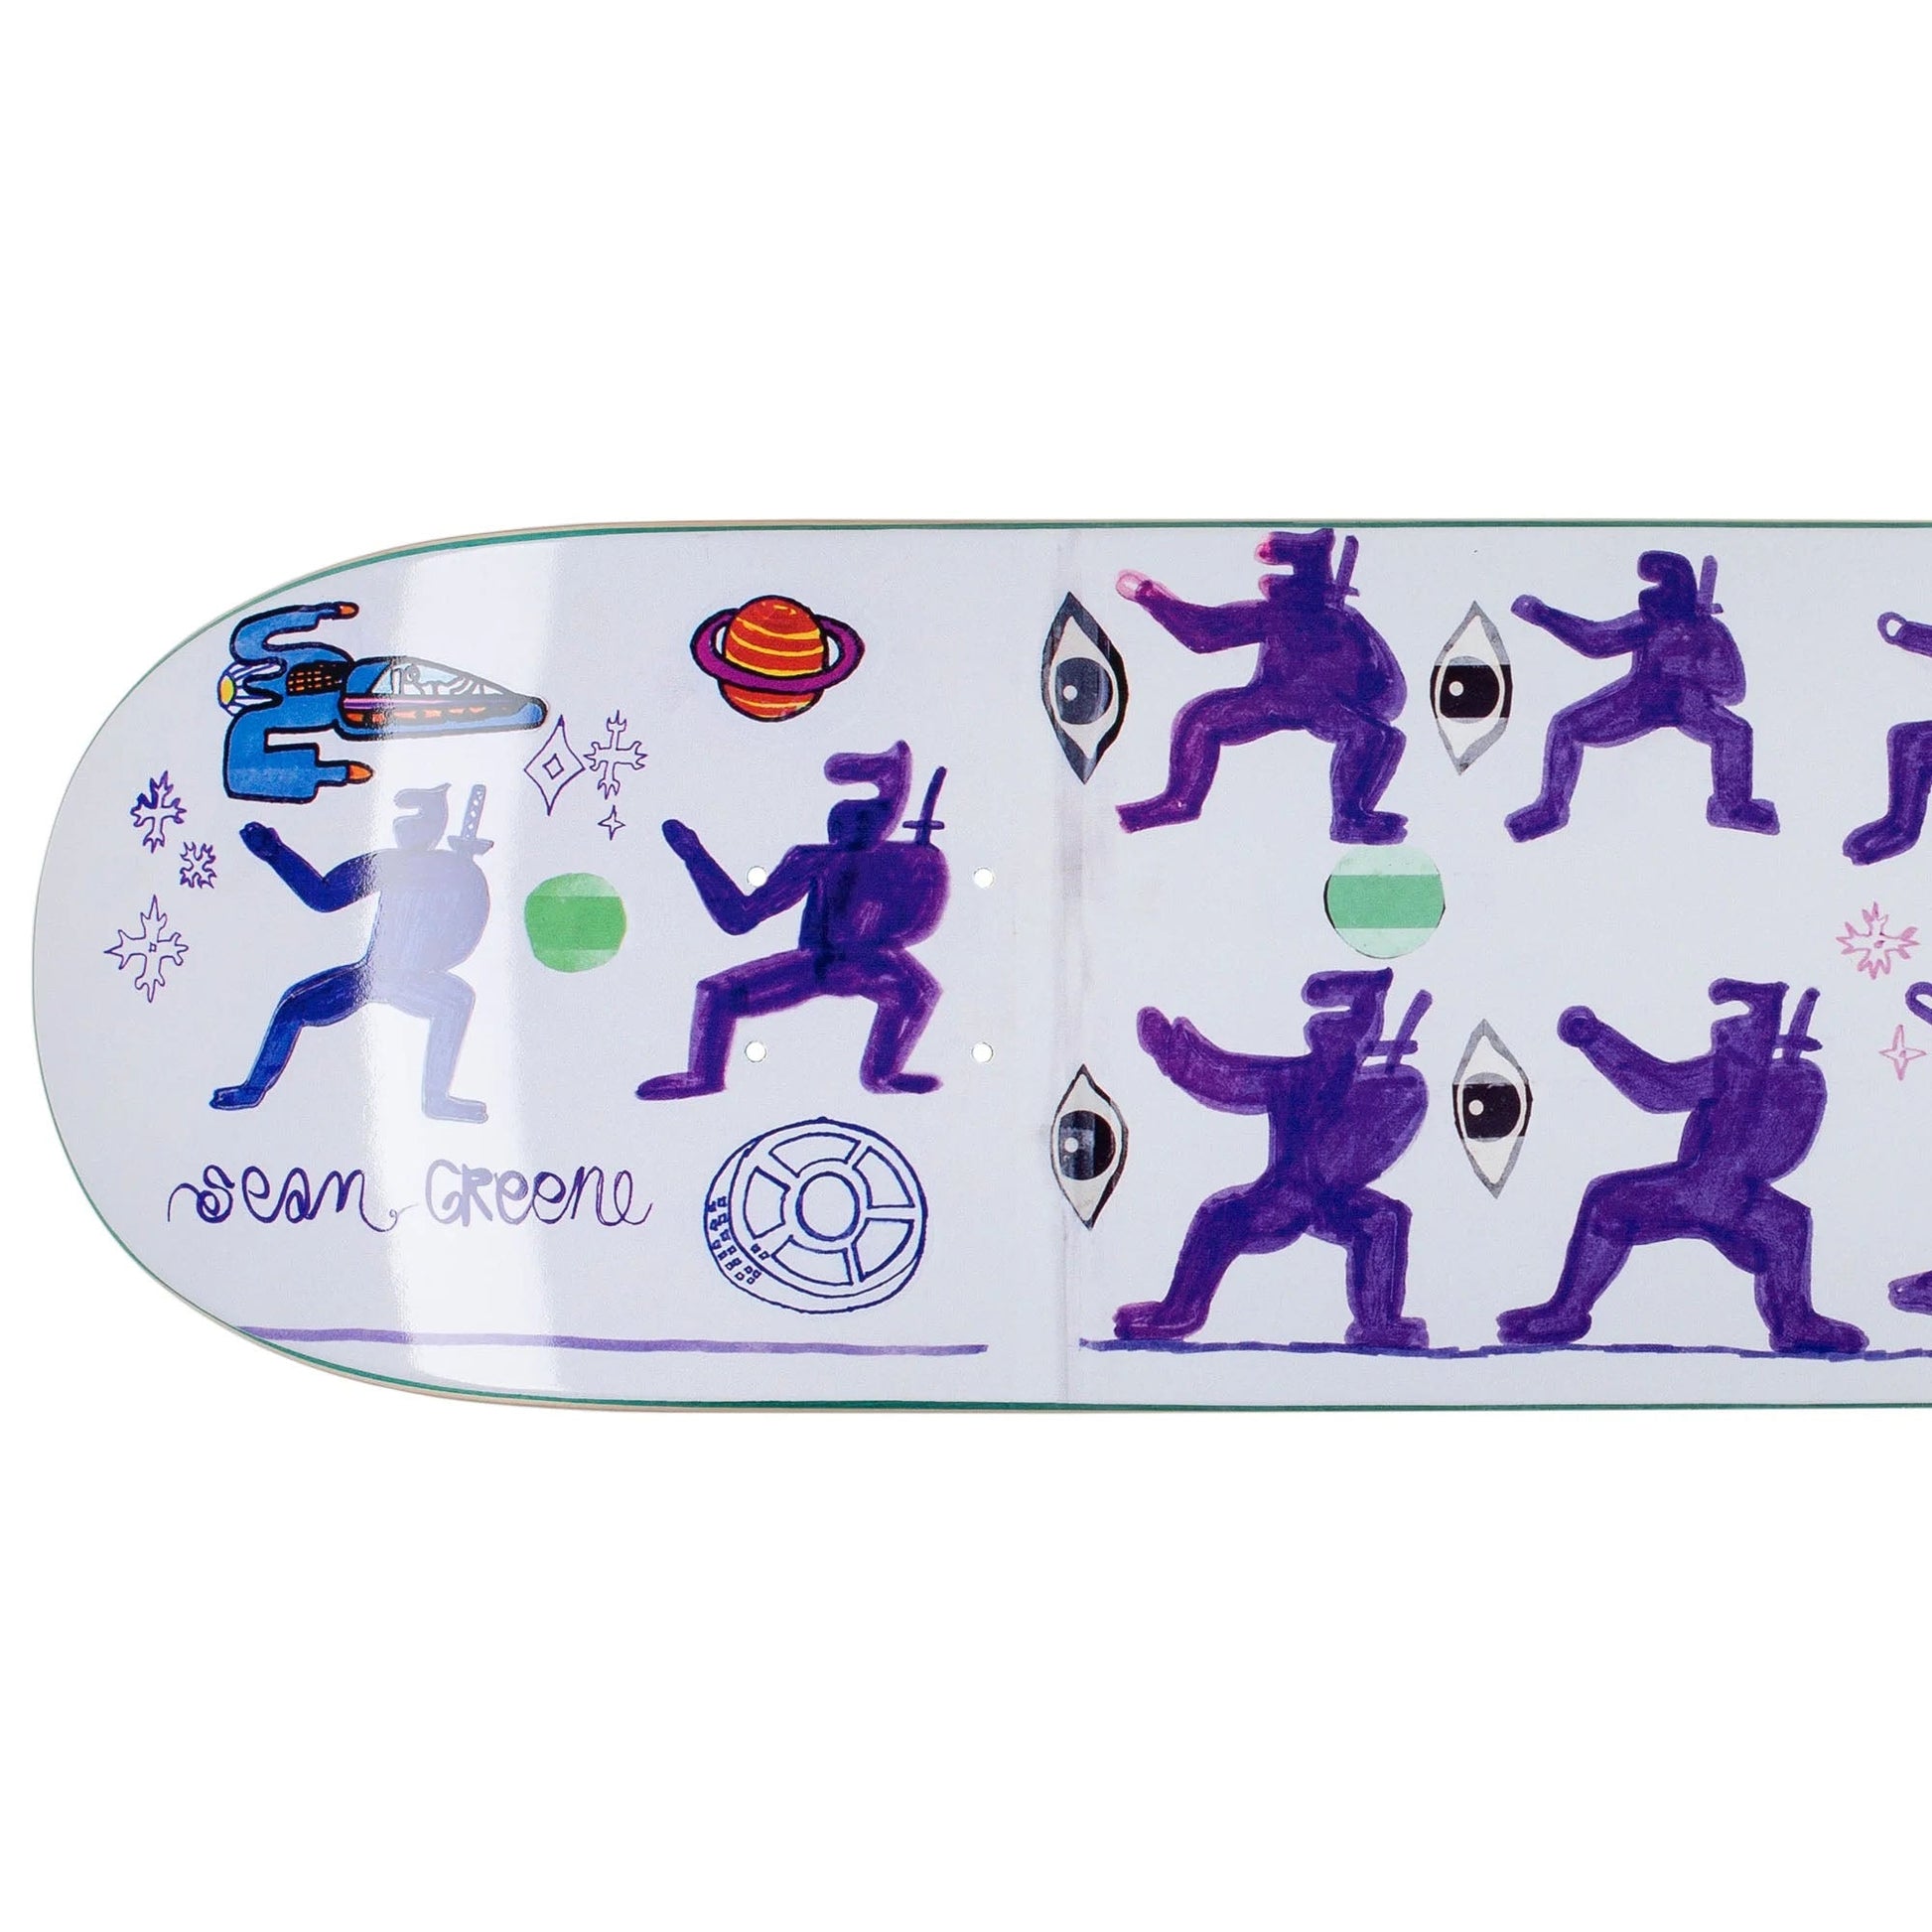 GX1000 Ninjas "Greene" Deck (8.375”) - Tiki Room Skateboards - 2